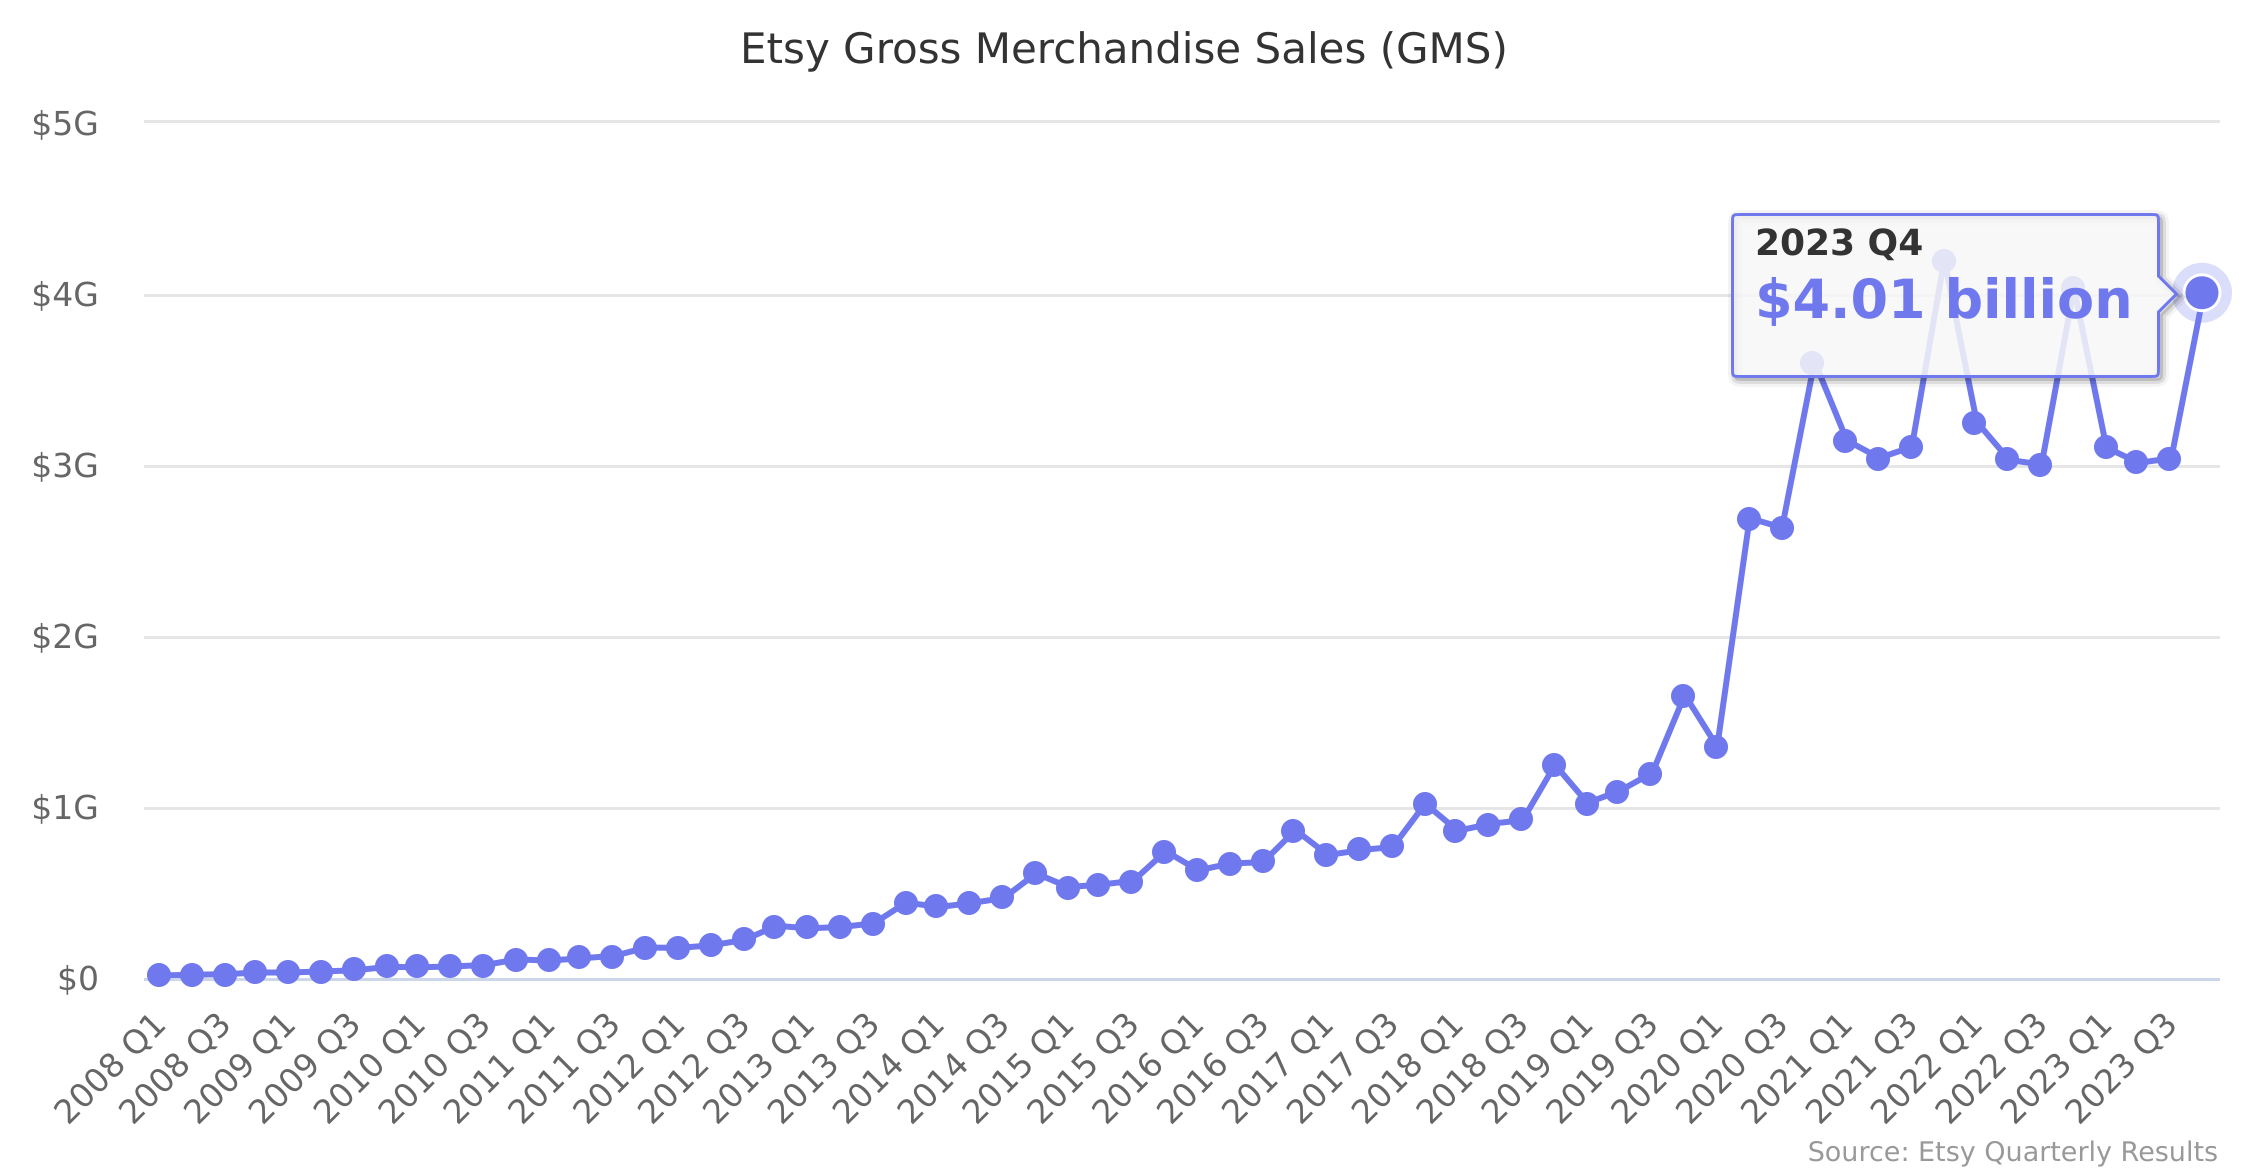 Etsy Gross Merchandise Sales (GMS)